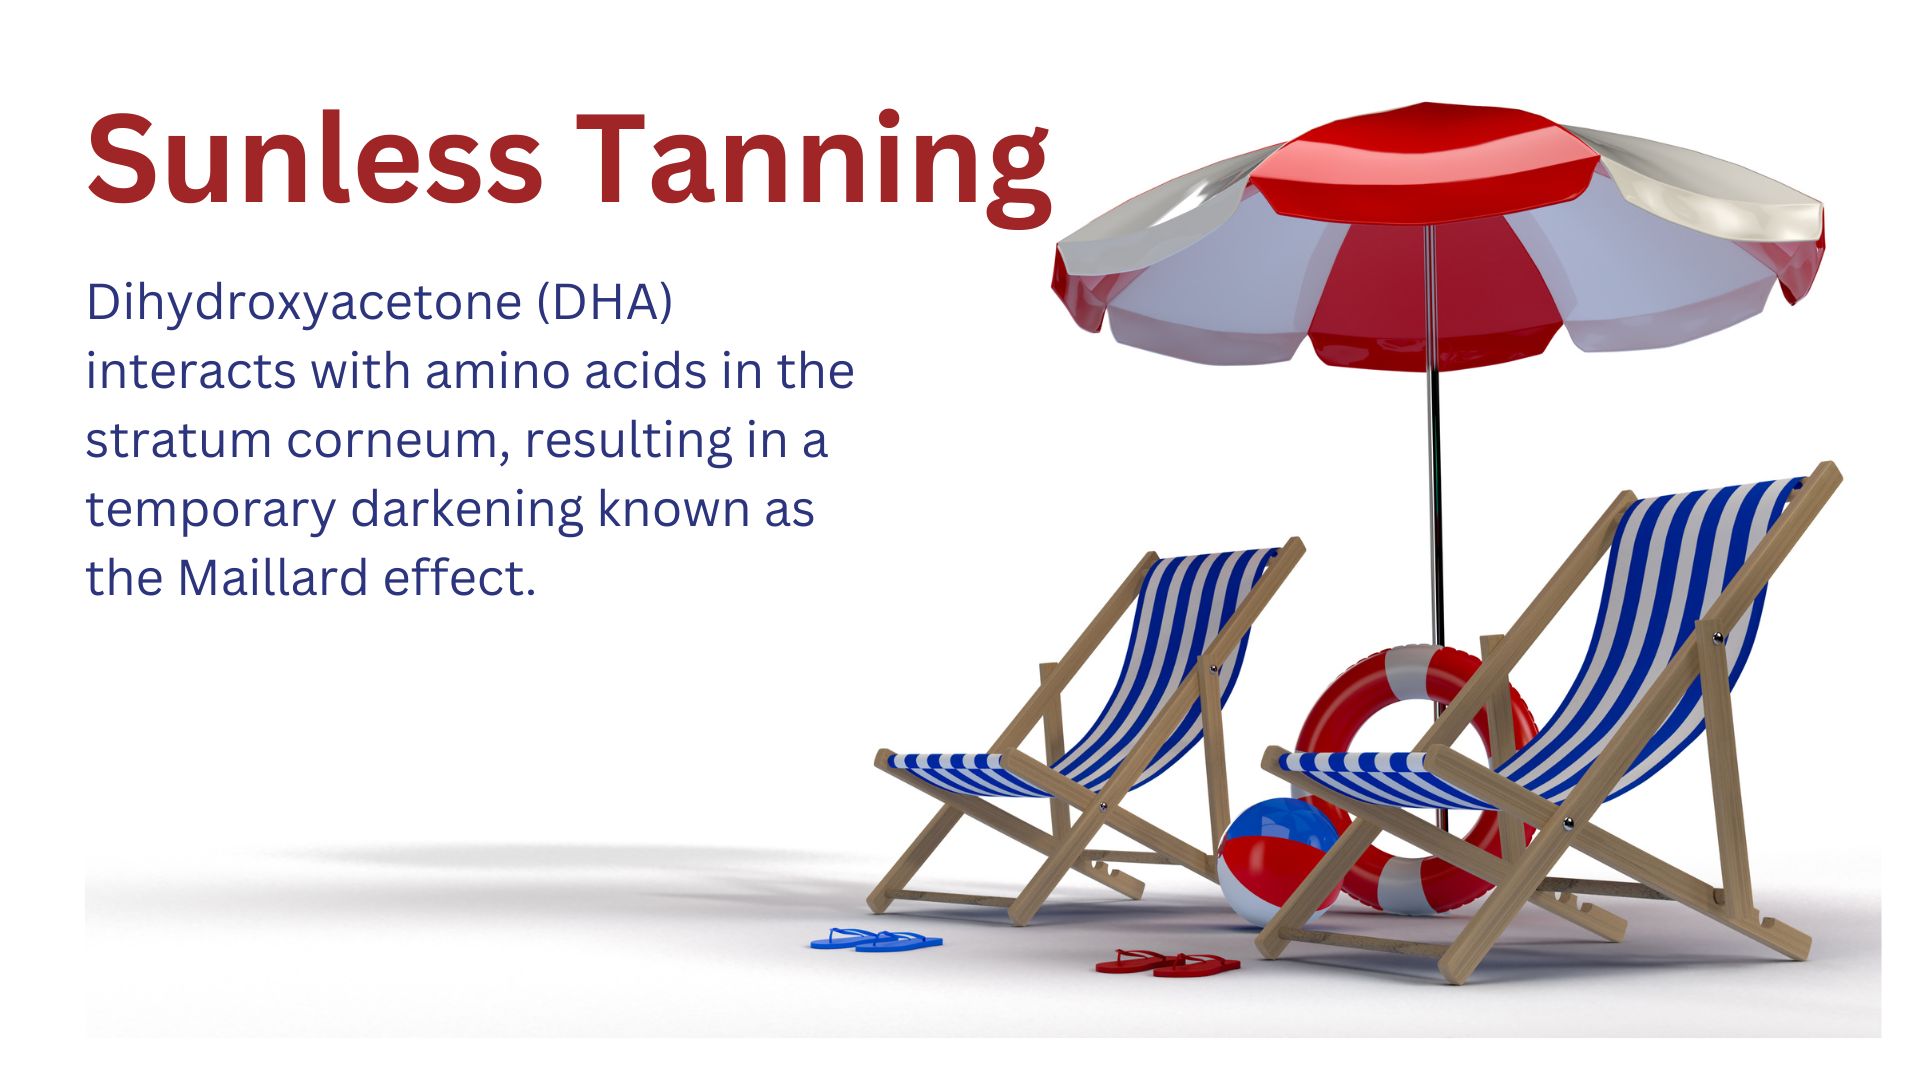 Infographic describing sunless tan ingredients